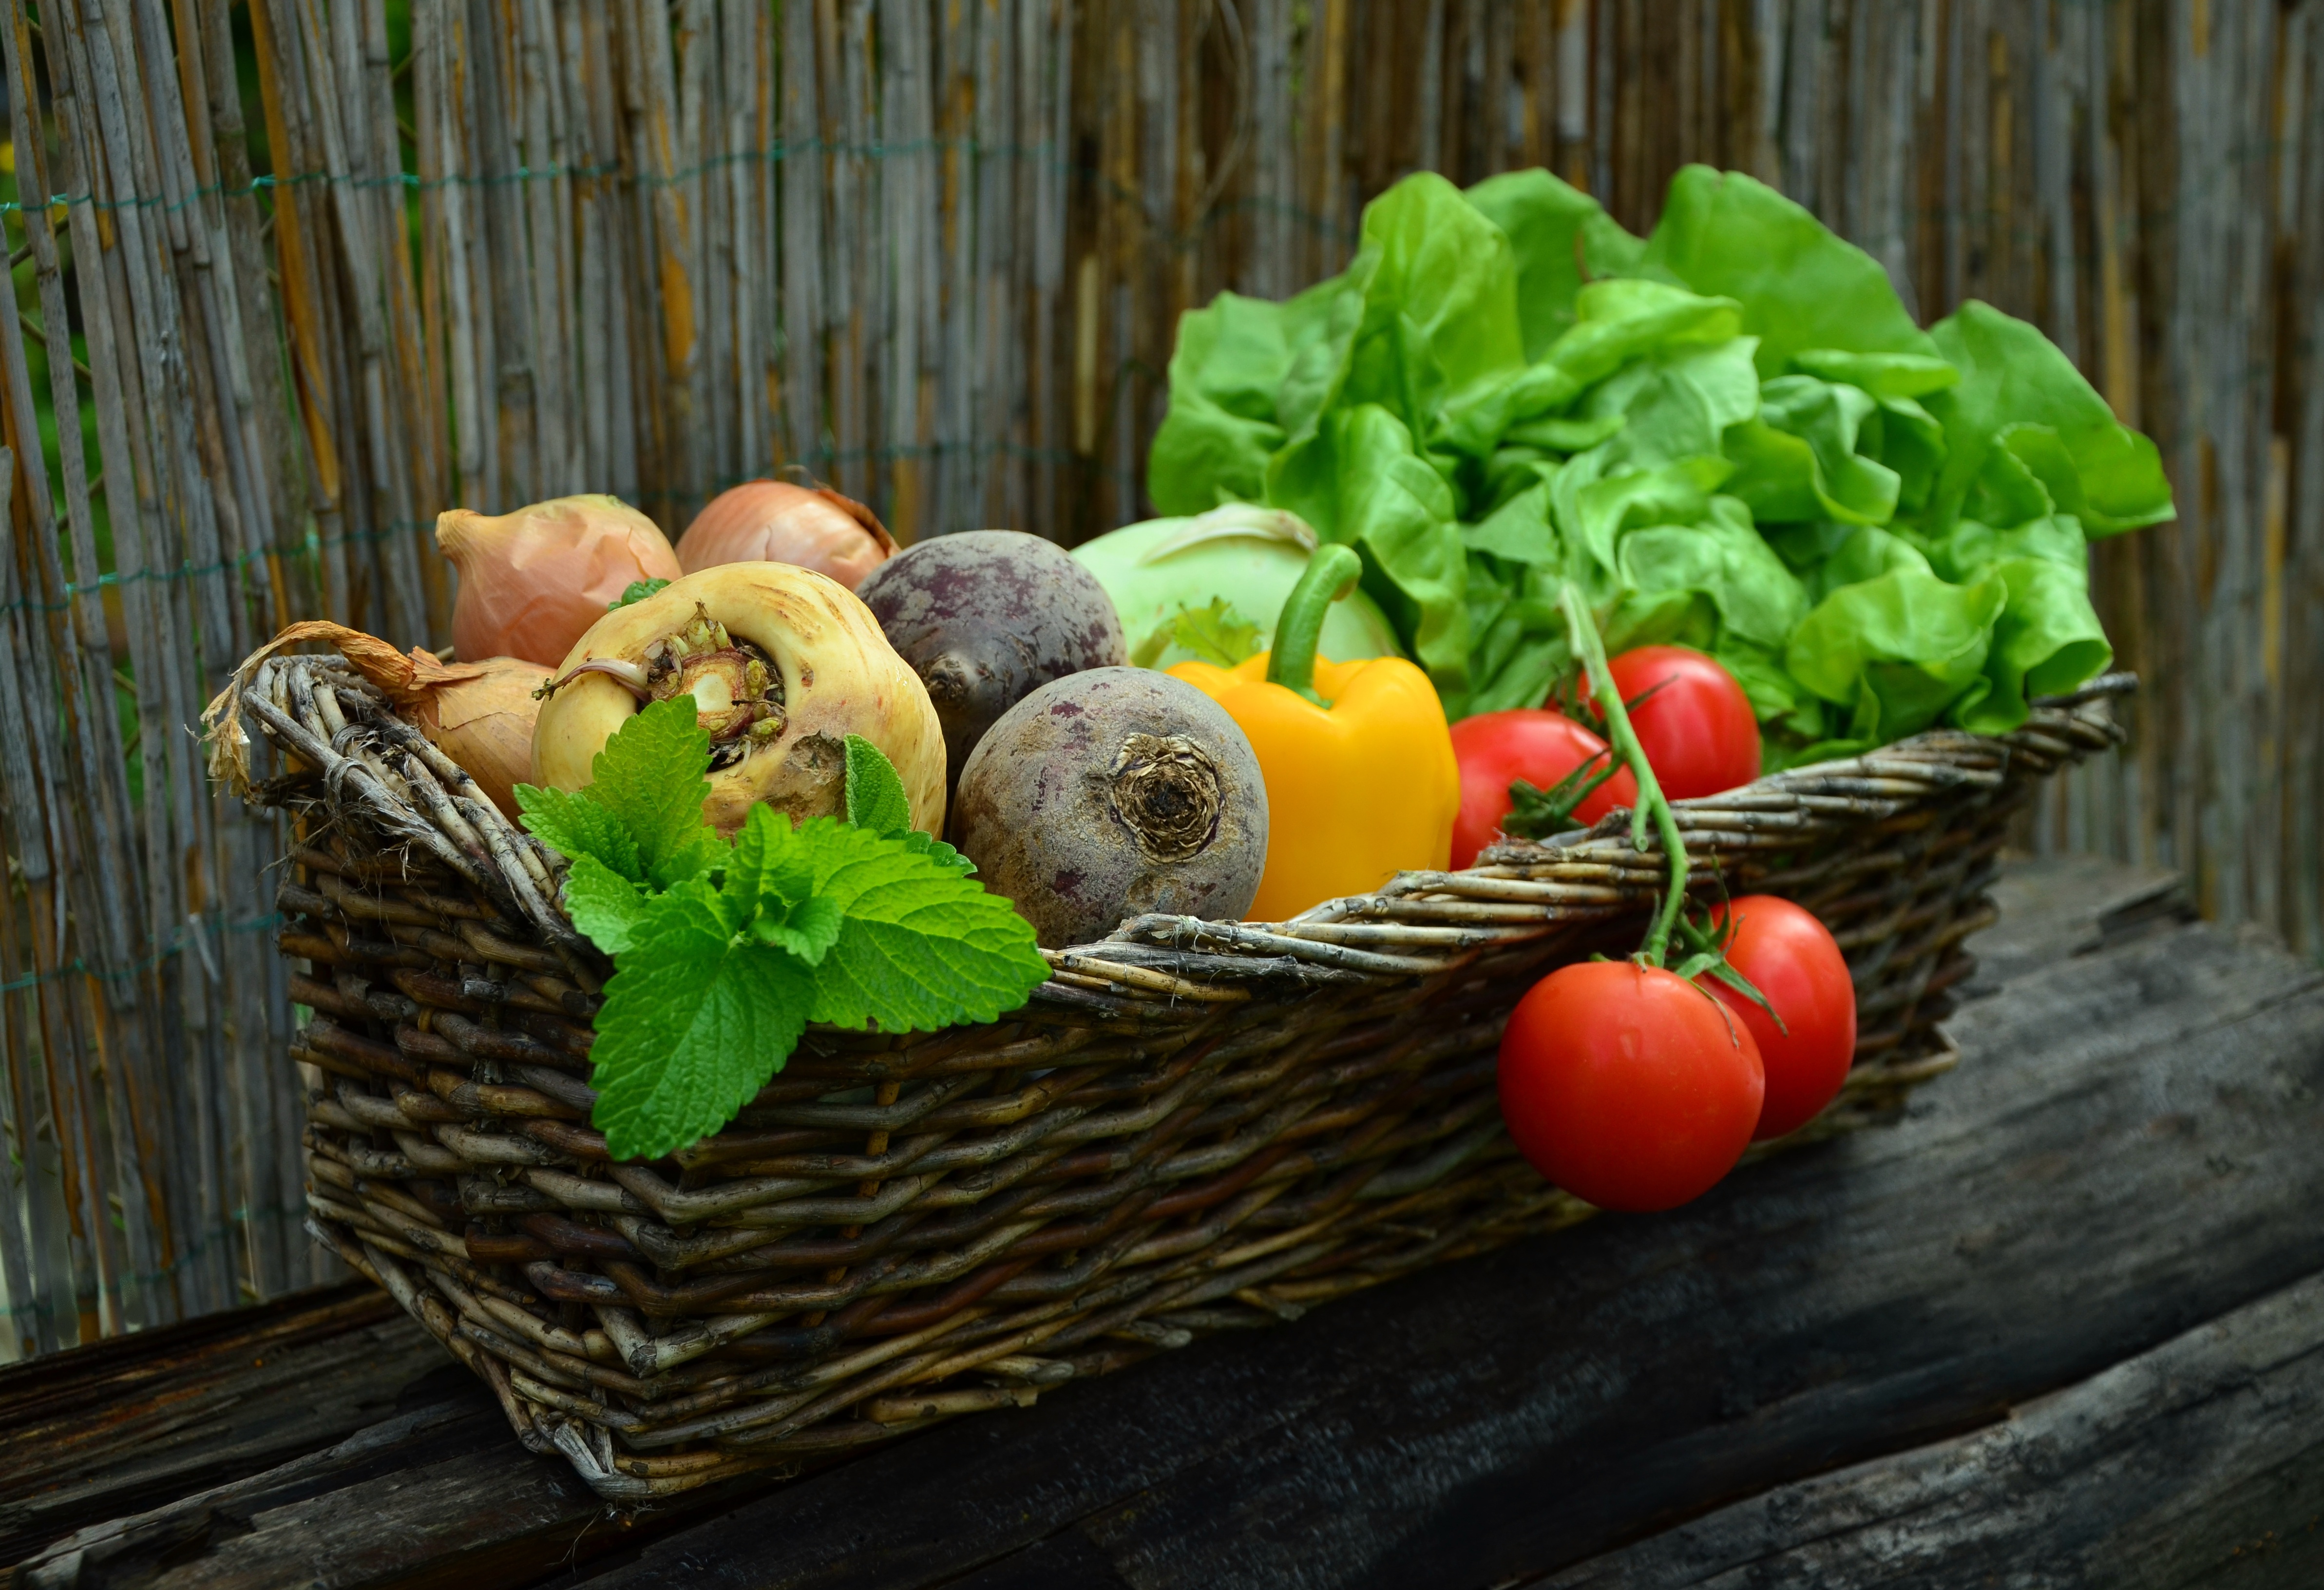 plant-fruit-food-salad-harvest-produce-879579-pxhere.com.jpg